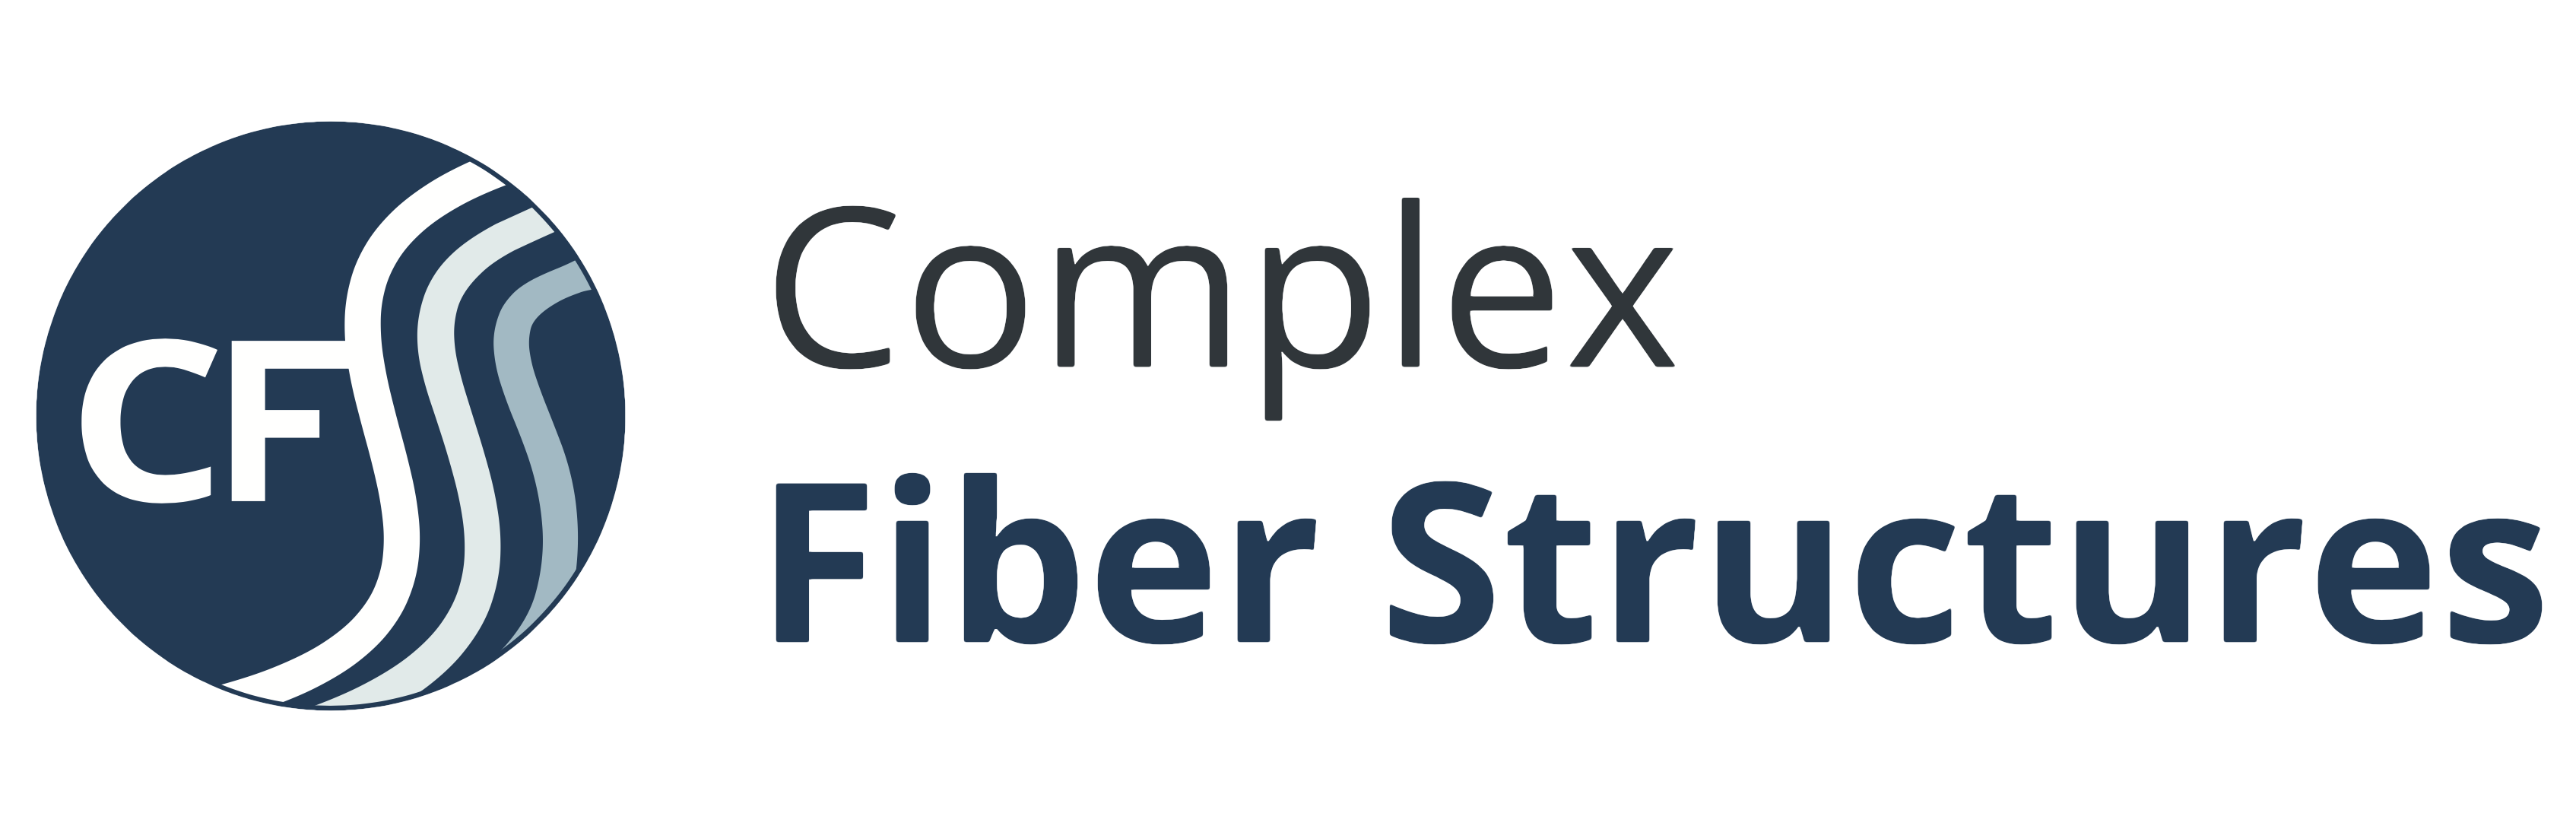 Complex Fiber Structures 